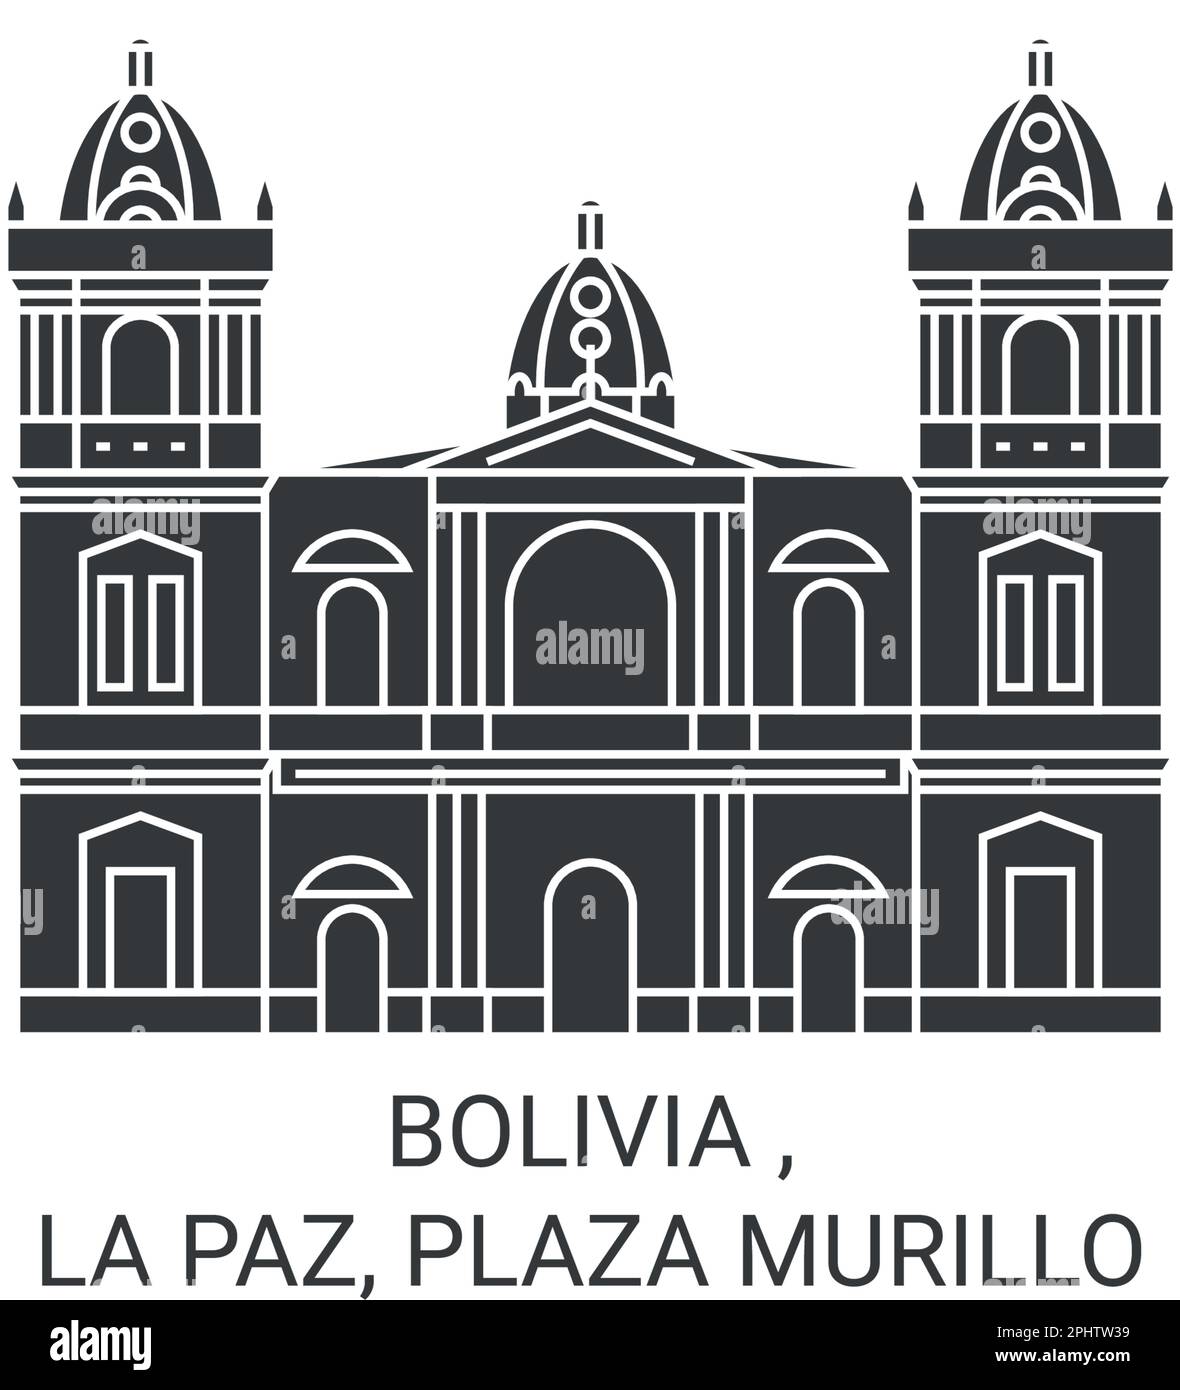 Bolivia , La Paz, Plaza Murillo travel landmark vector illustration Stock Vector